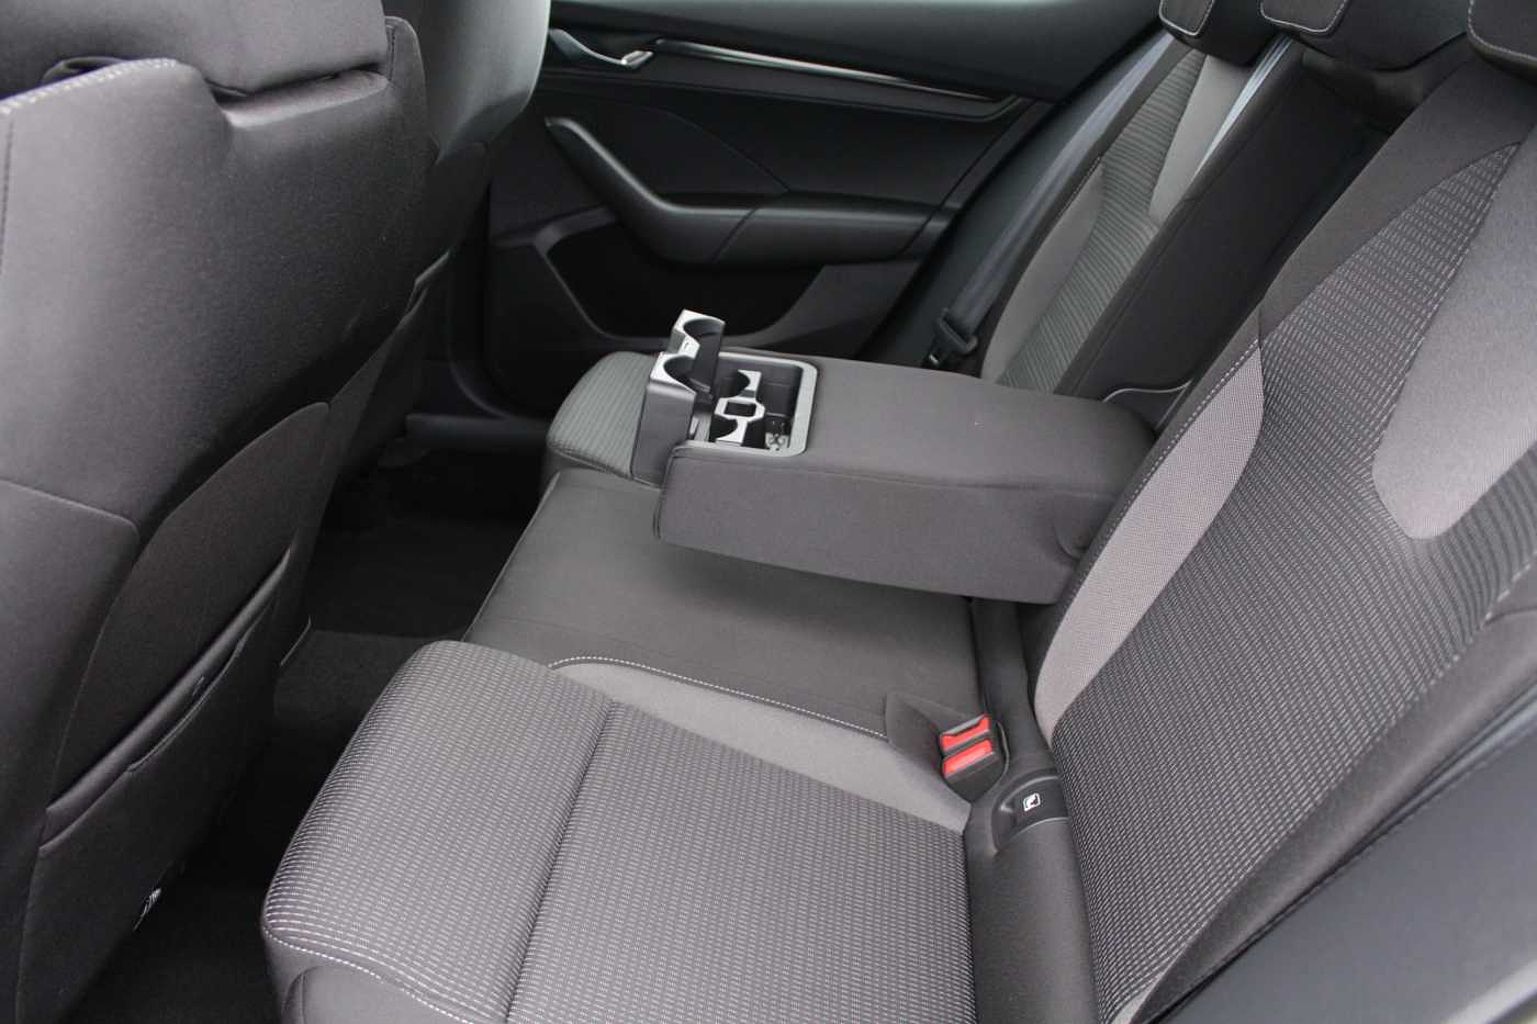 SKODA Octavia TSI (110ps) SE Technology Hatchback